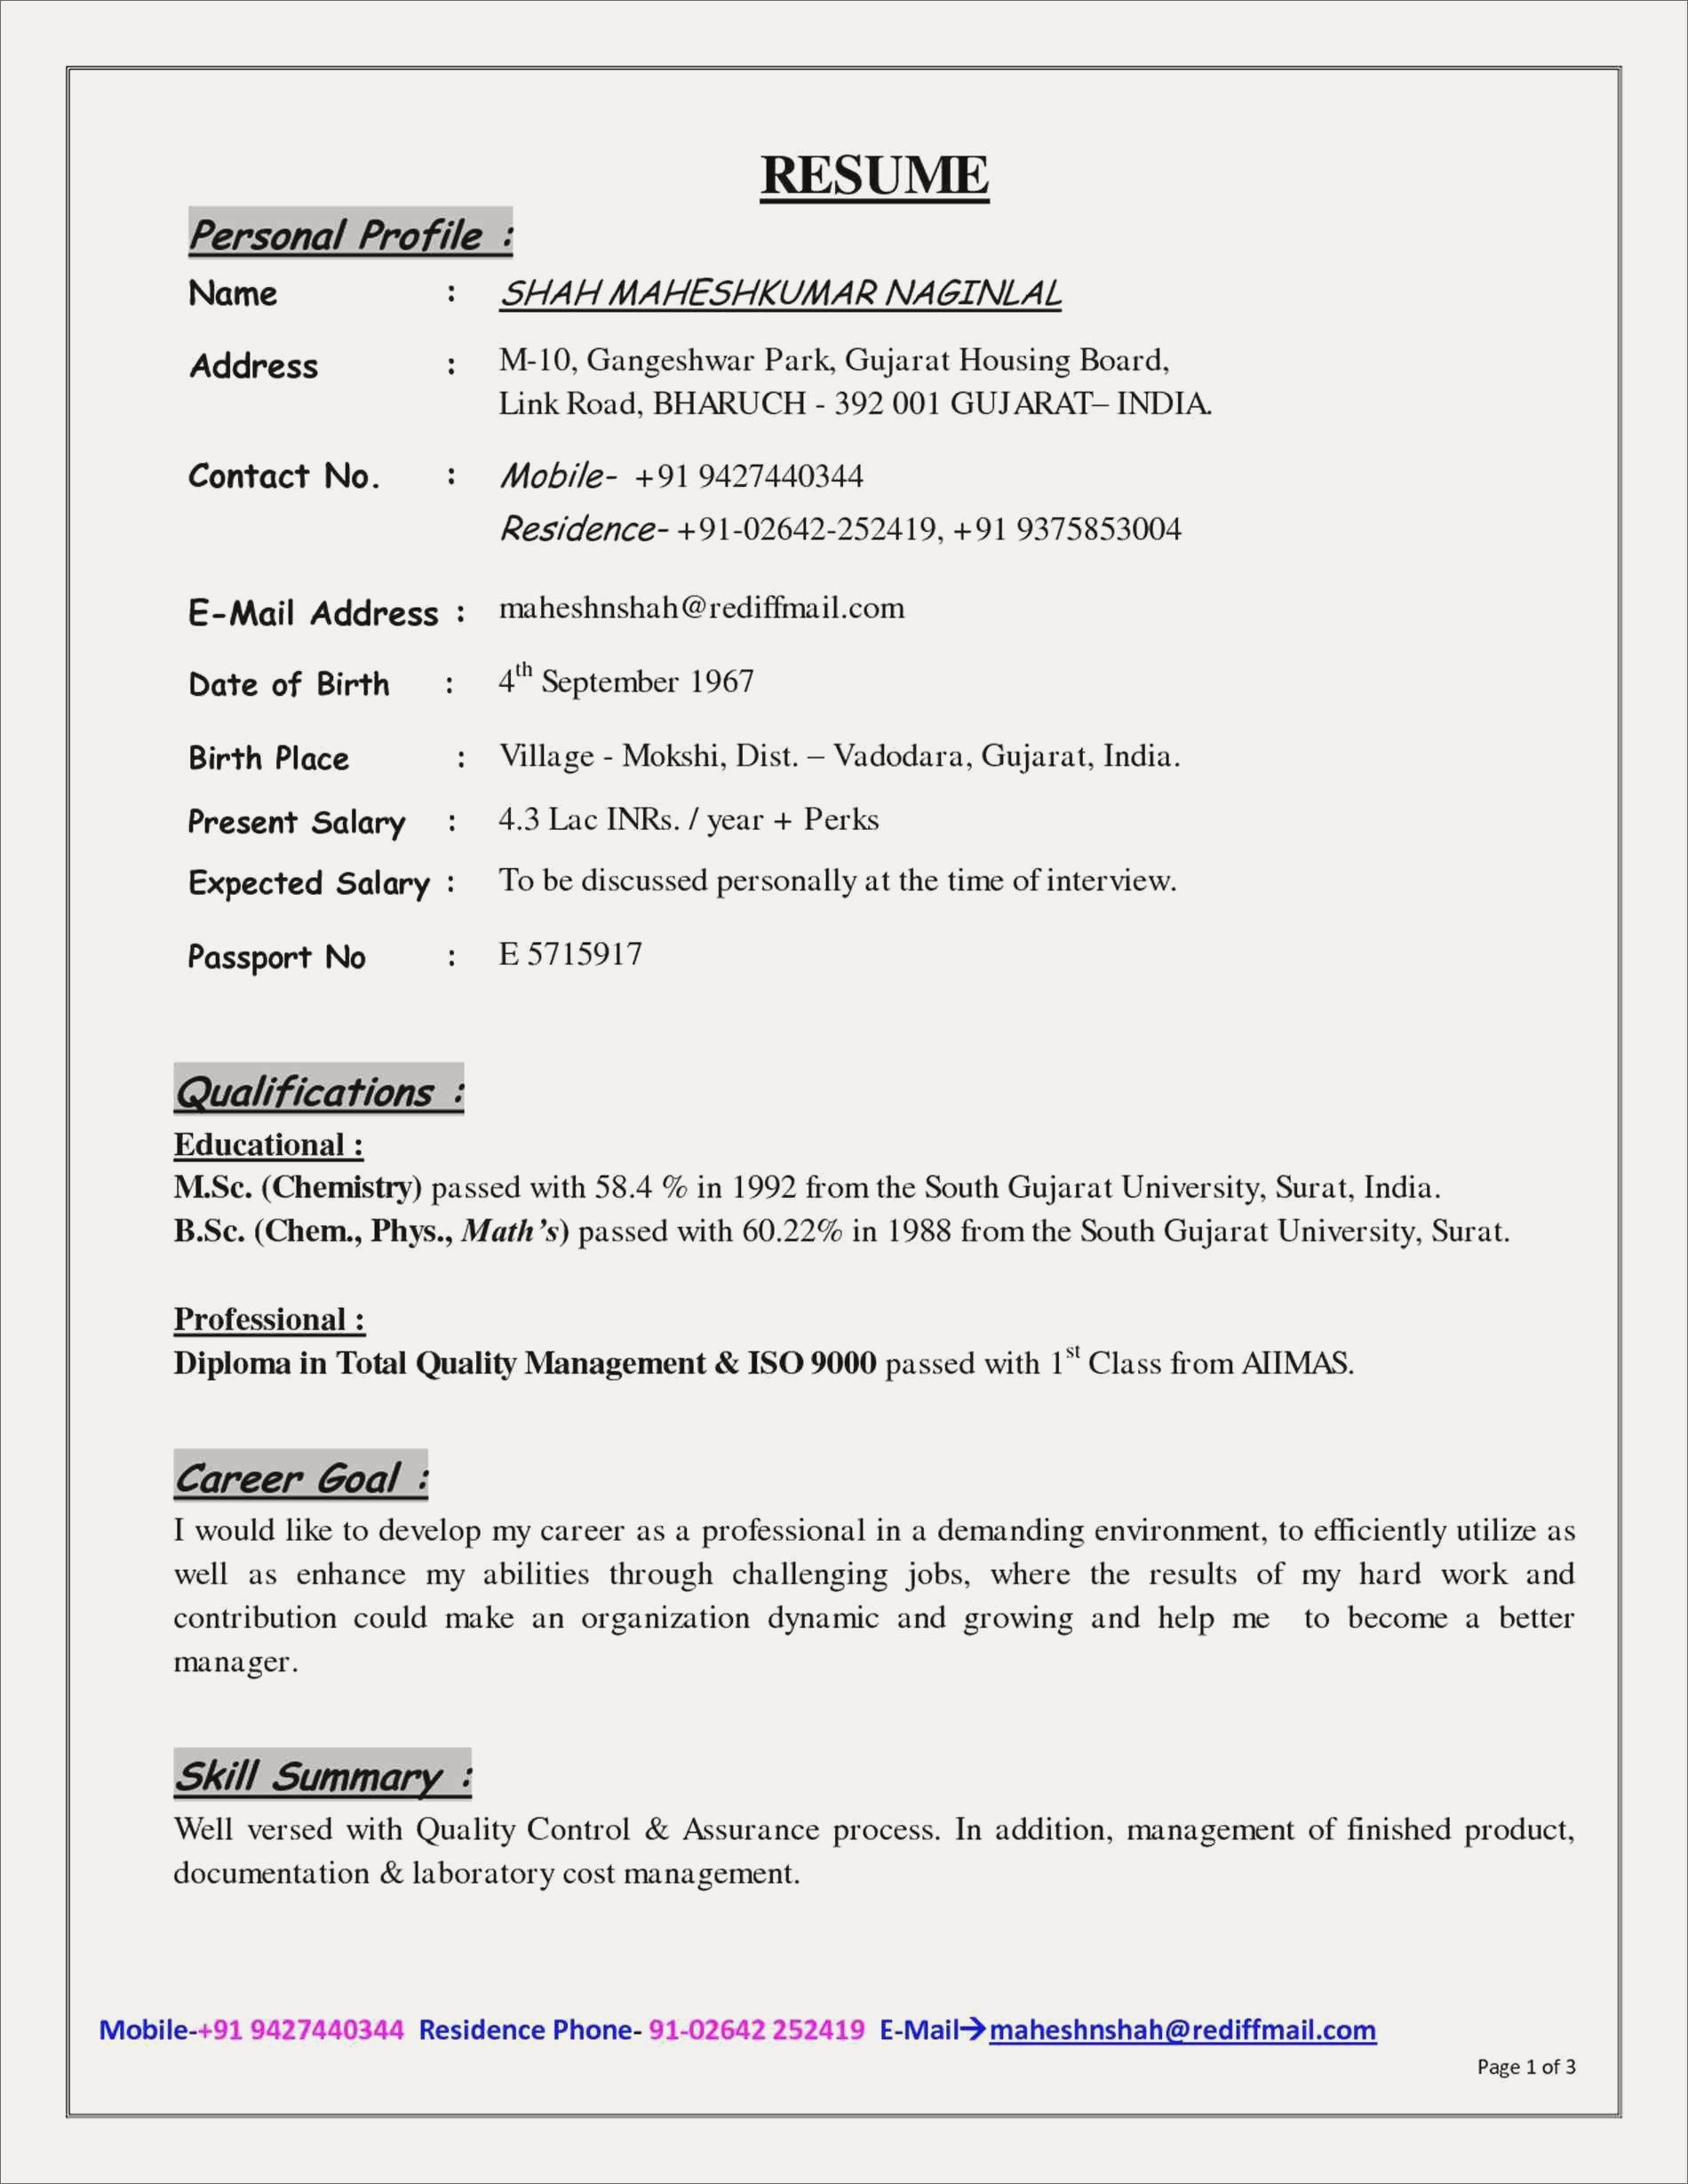 Sample Resume for Job Interview Pdf Professional Resume Resume format for Job Interview Pdf